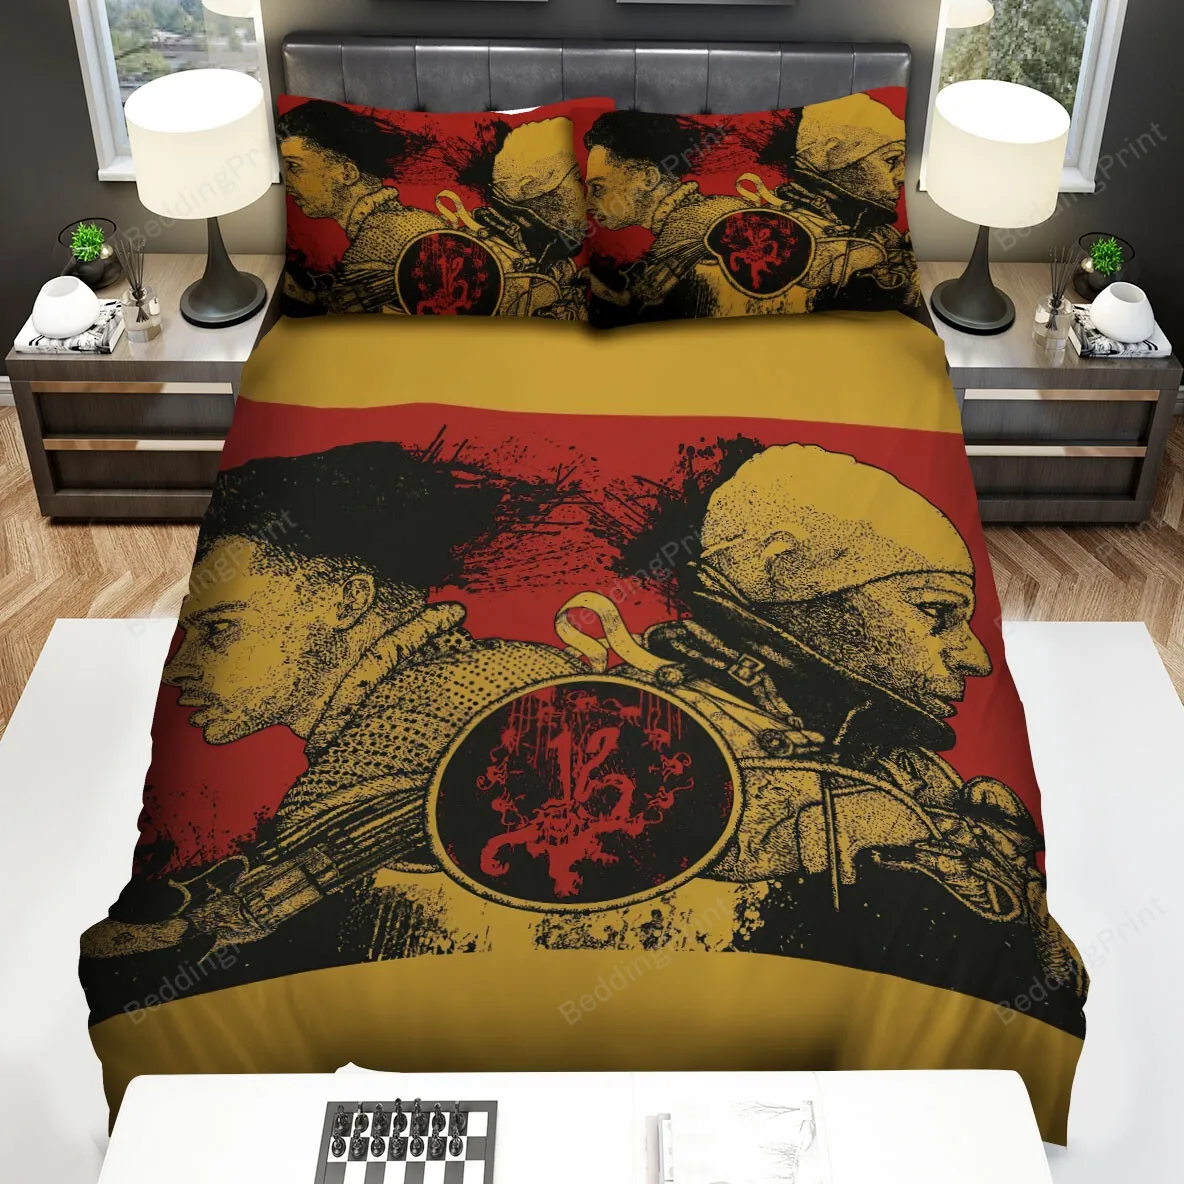 12 Monkeys (20152018) Wallpaper Movie Poster Bed Sheets Spread Comforter Duvet Cover Bedding Sets